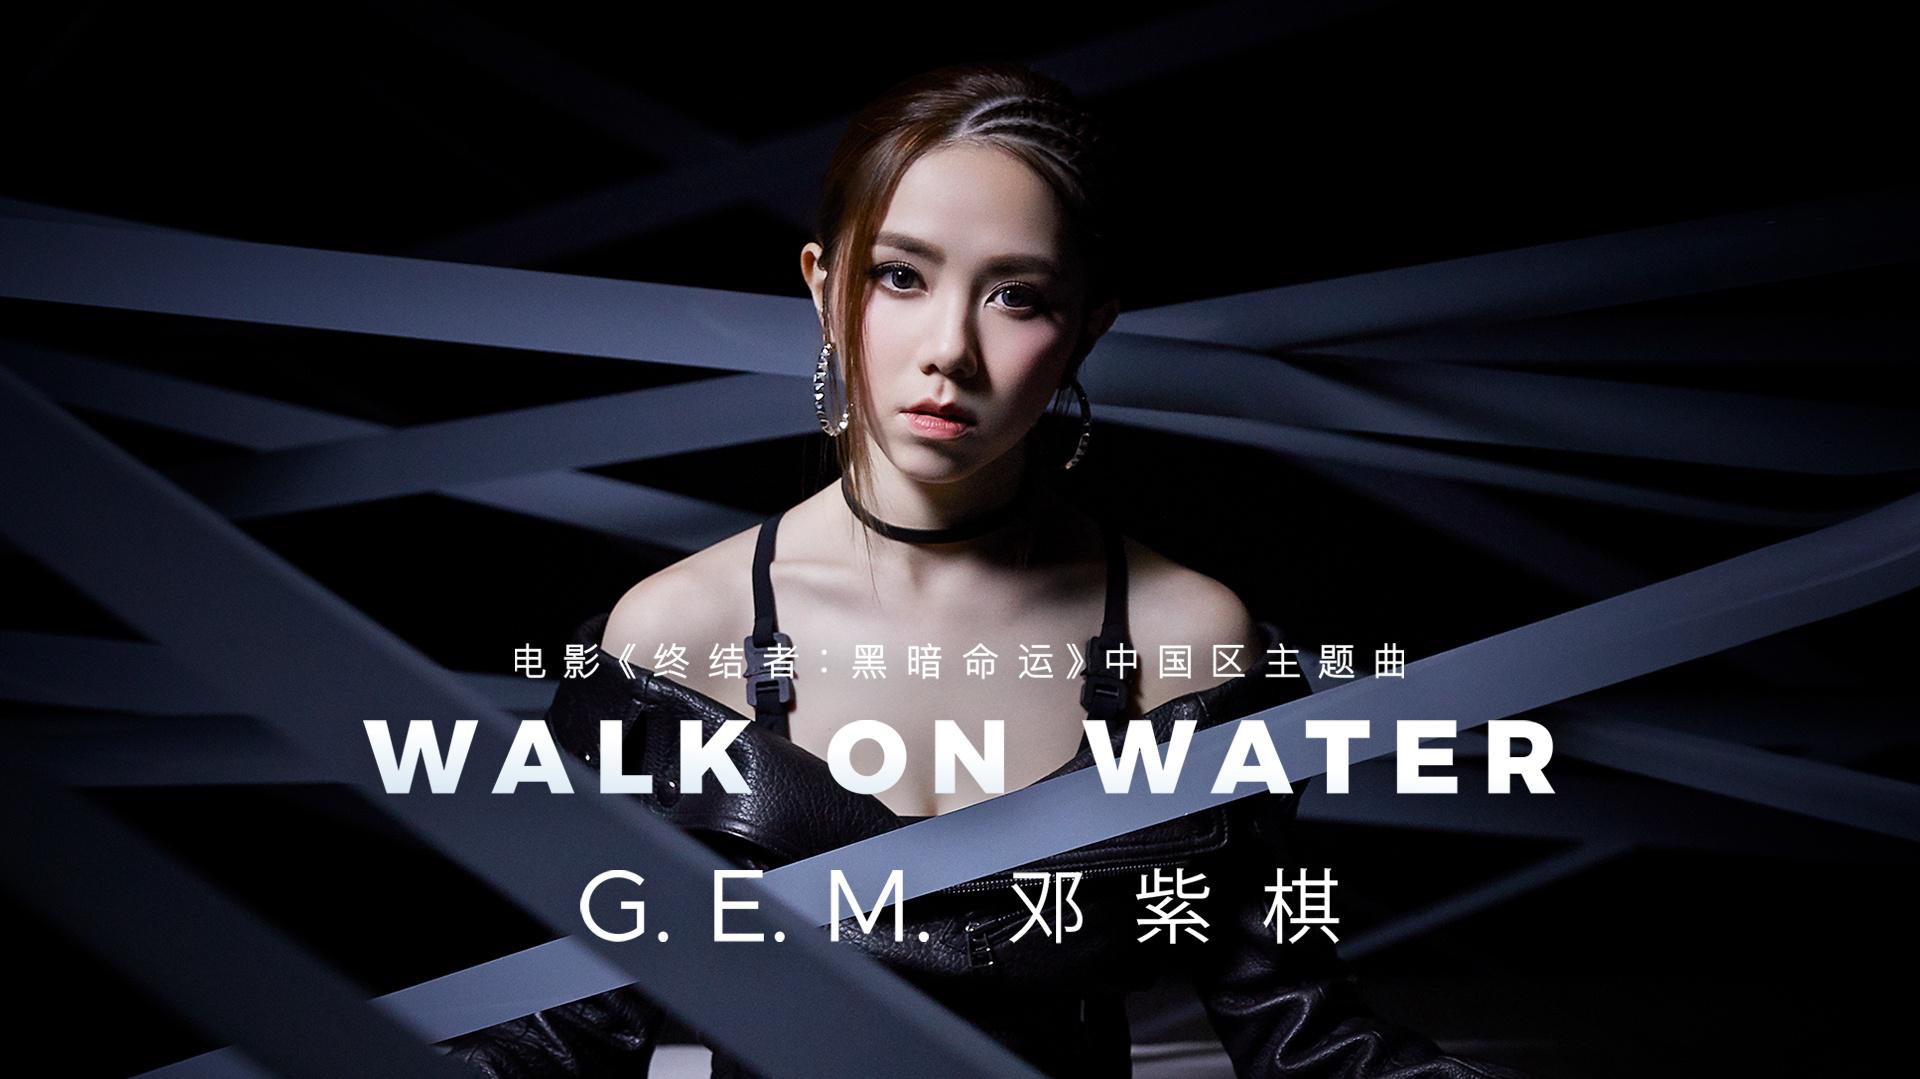 G.E.M.邓紫棋 - Walk On Water (电影《终结者：黑暗命运》中国区主题曲)